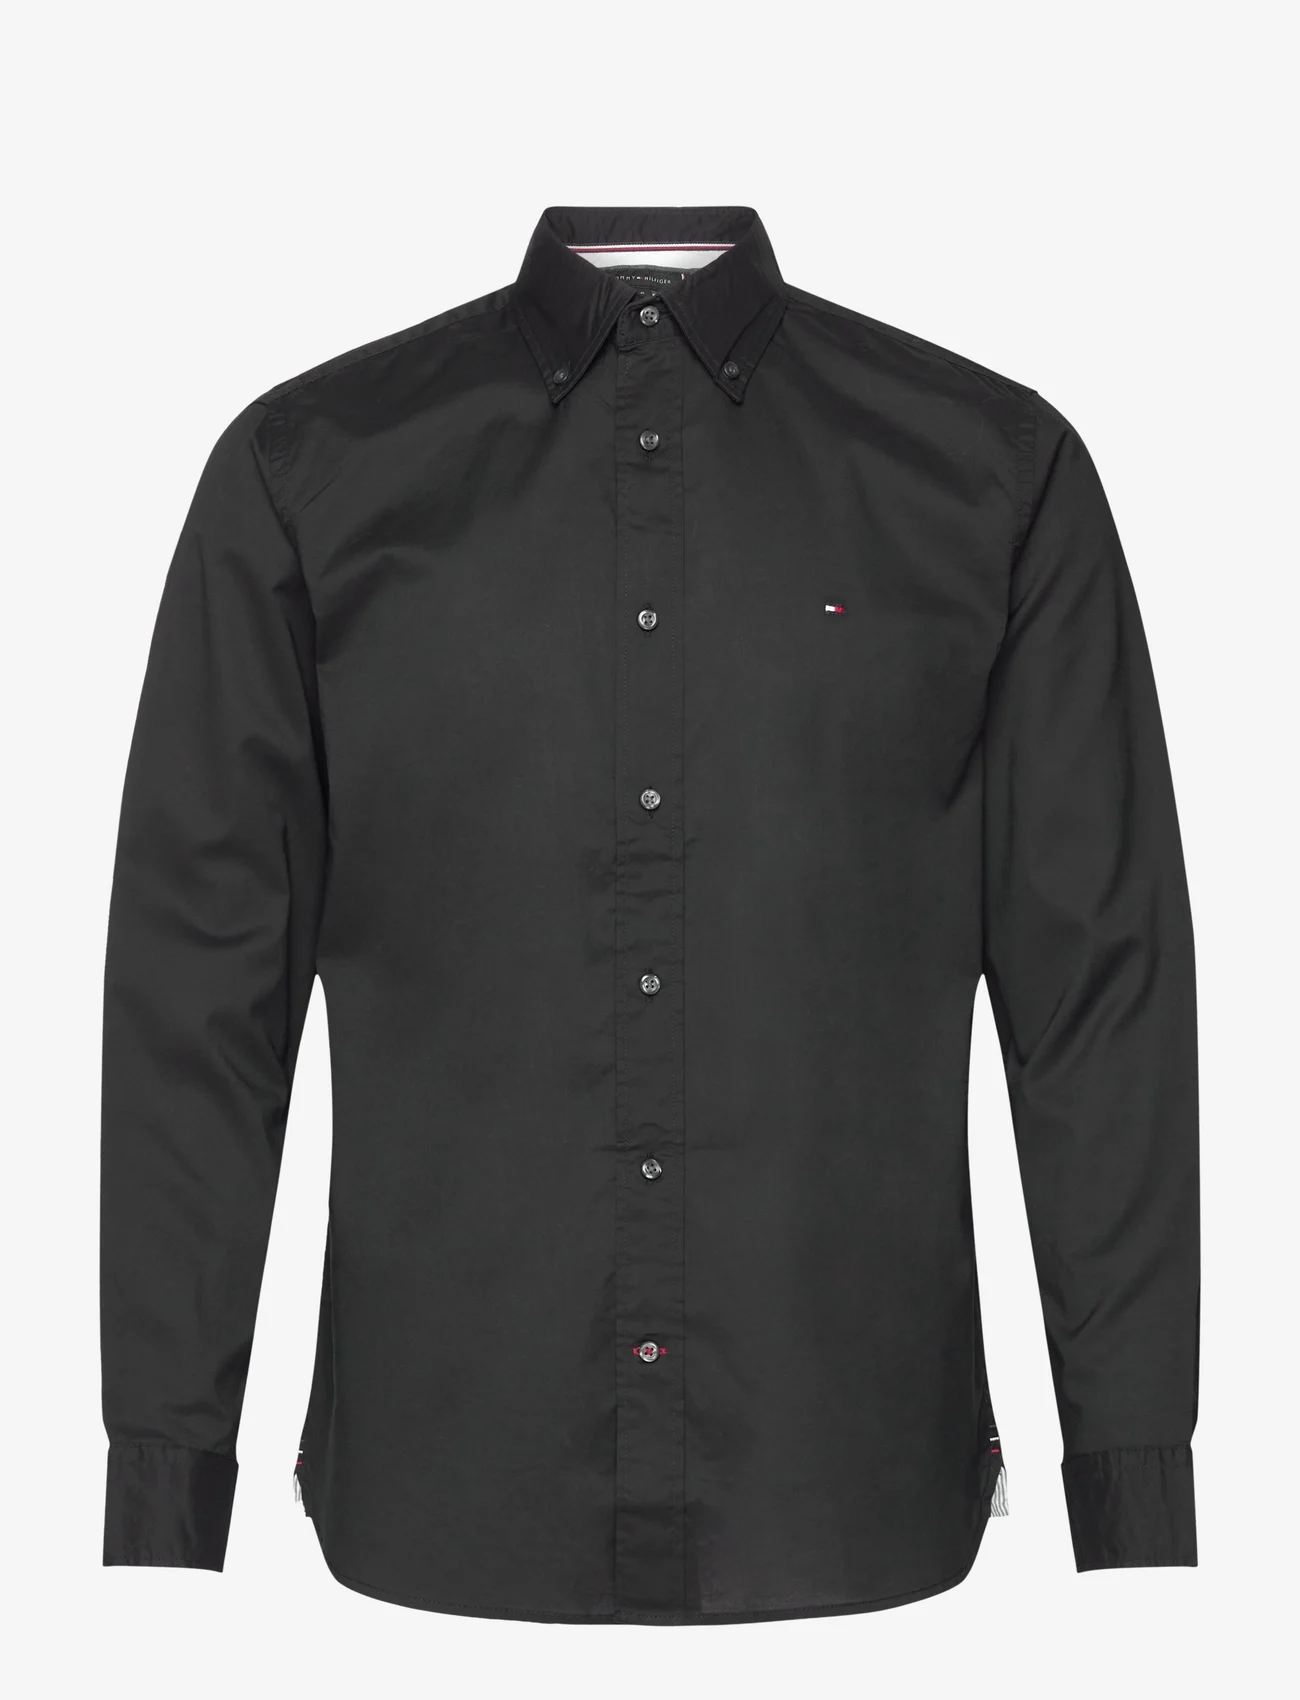 Tommy Hilfiger - CORE FLEX POPLIN RF SHIRT - casual shirts - black - 1